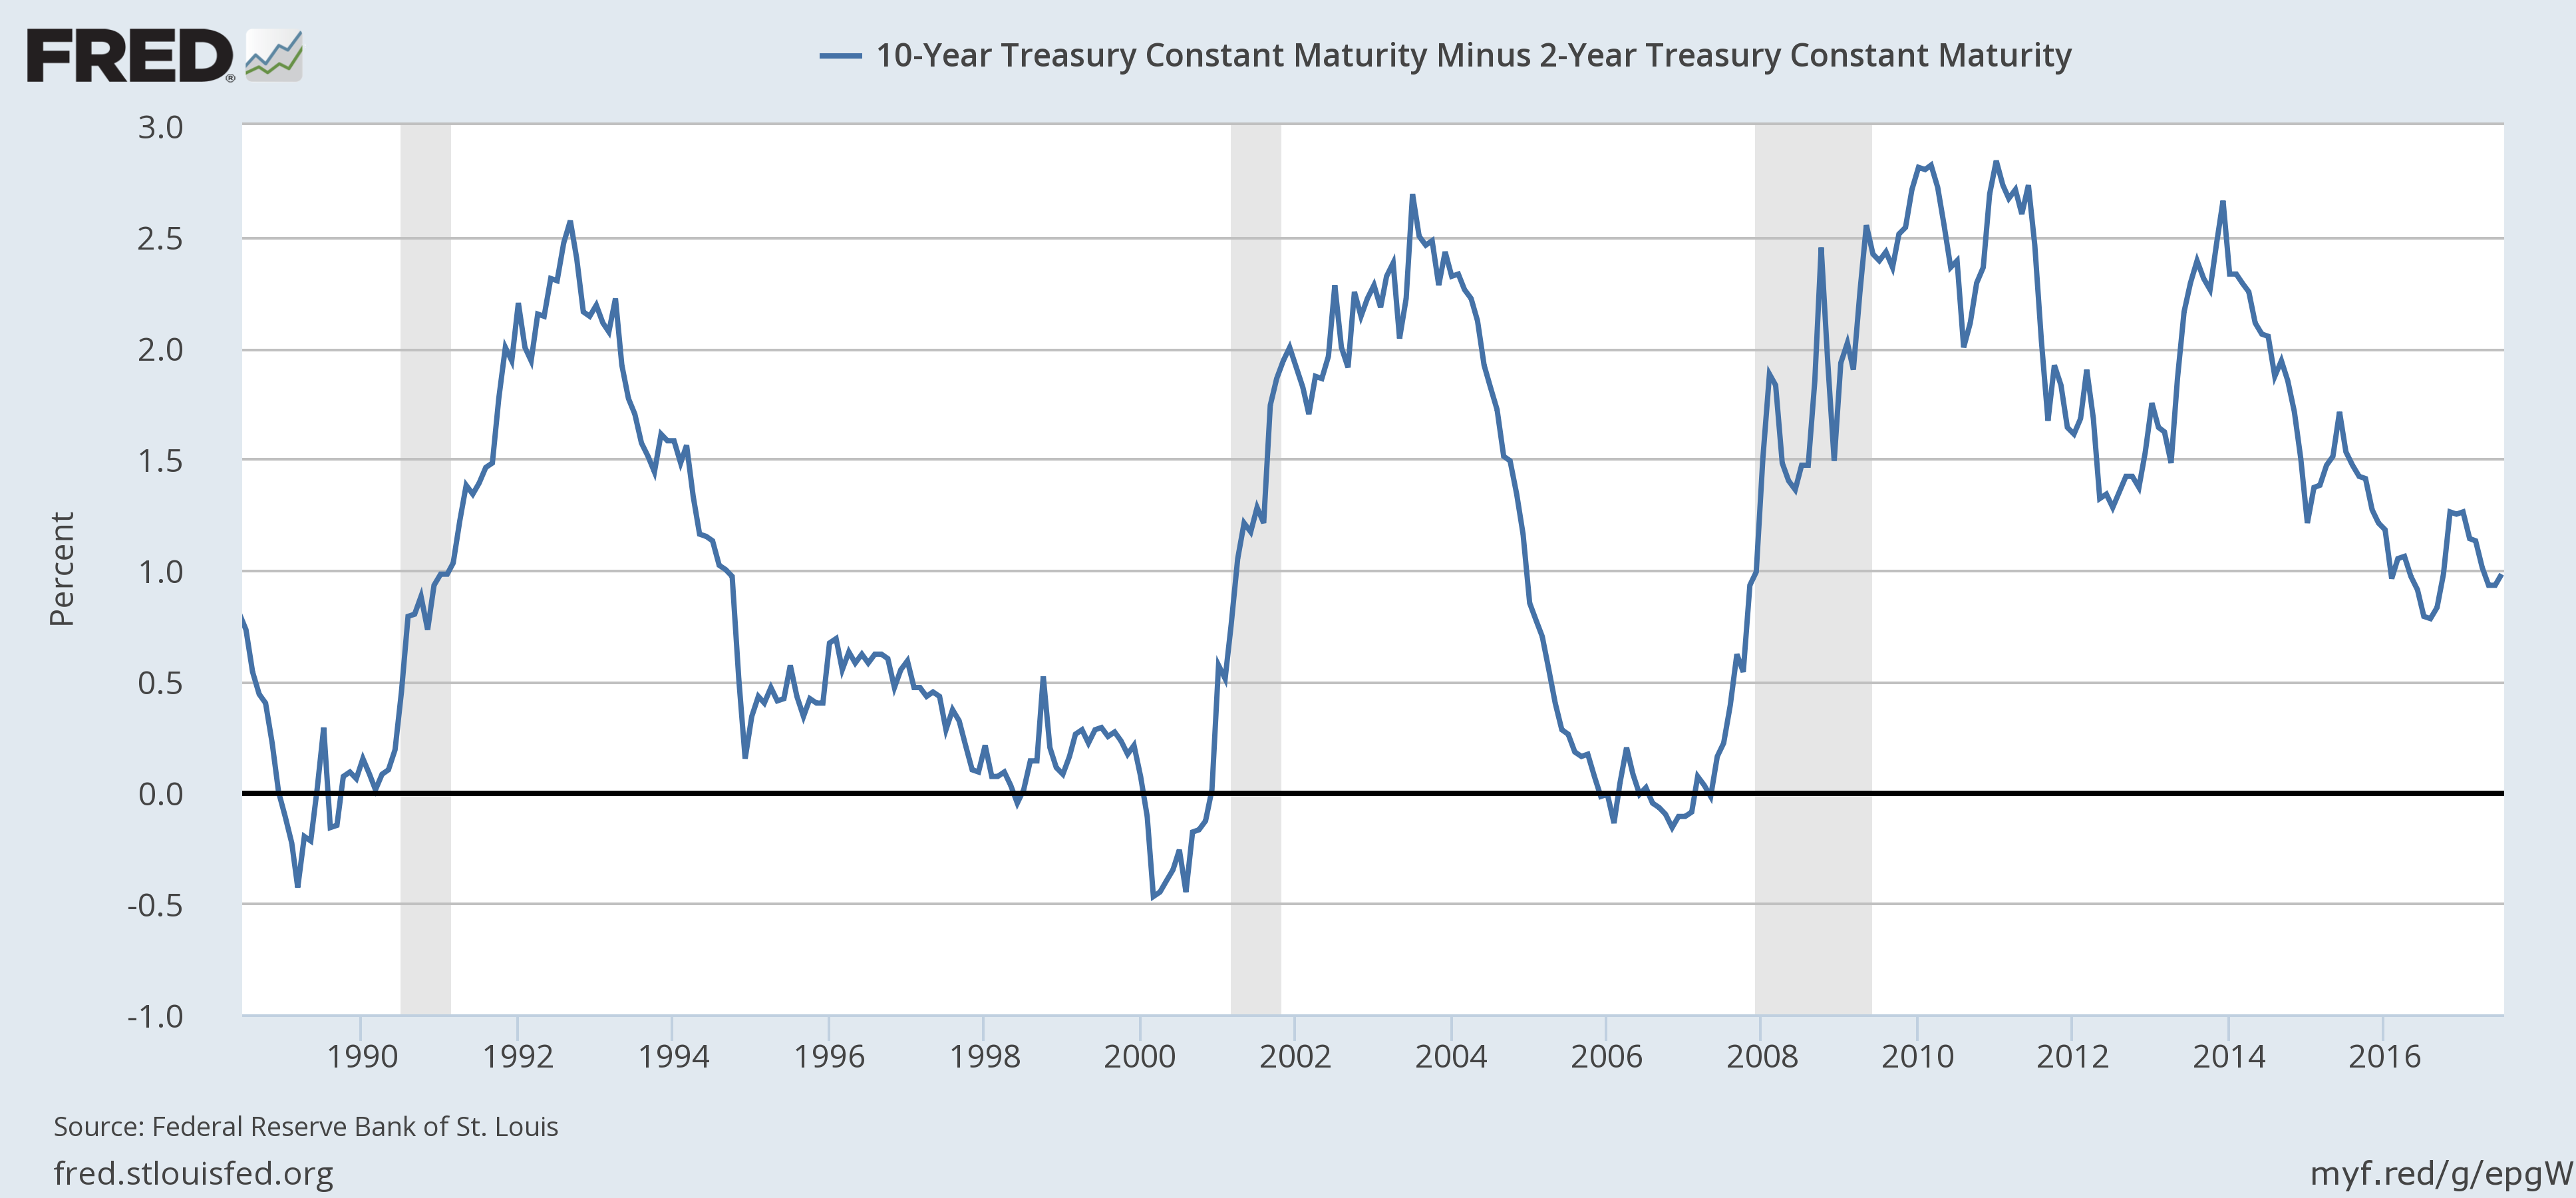 10-Year Treasury Constant Maturity Minus 2-Year Treasury